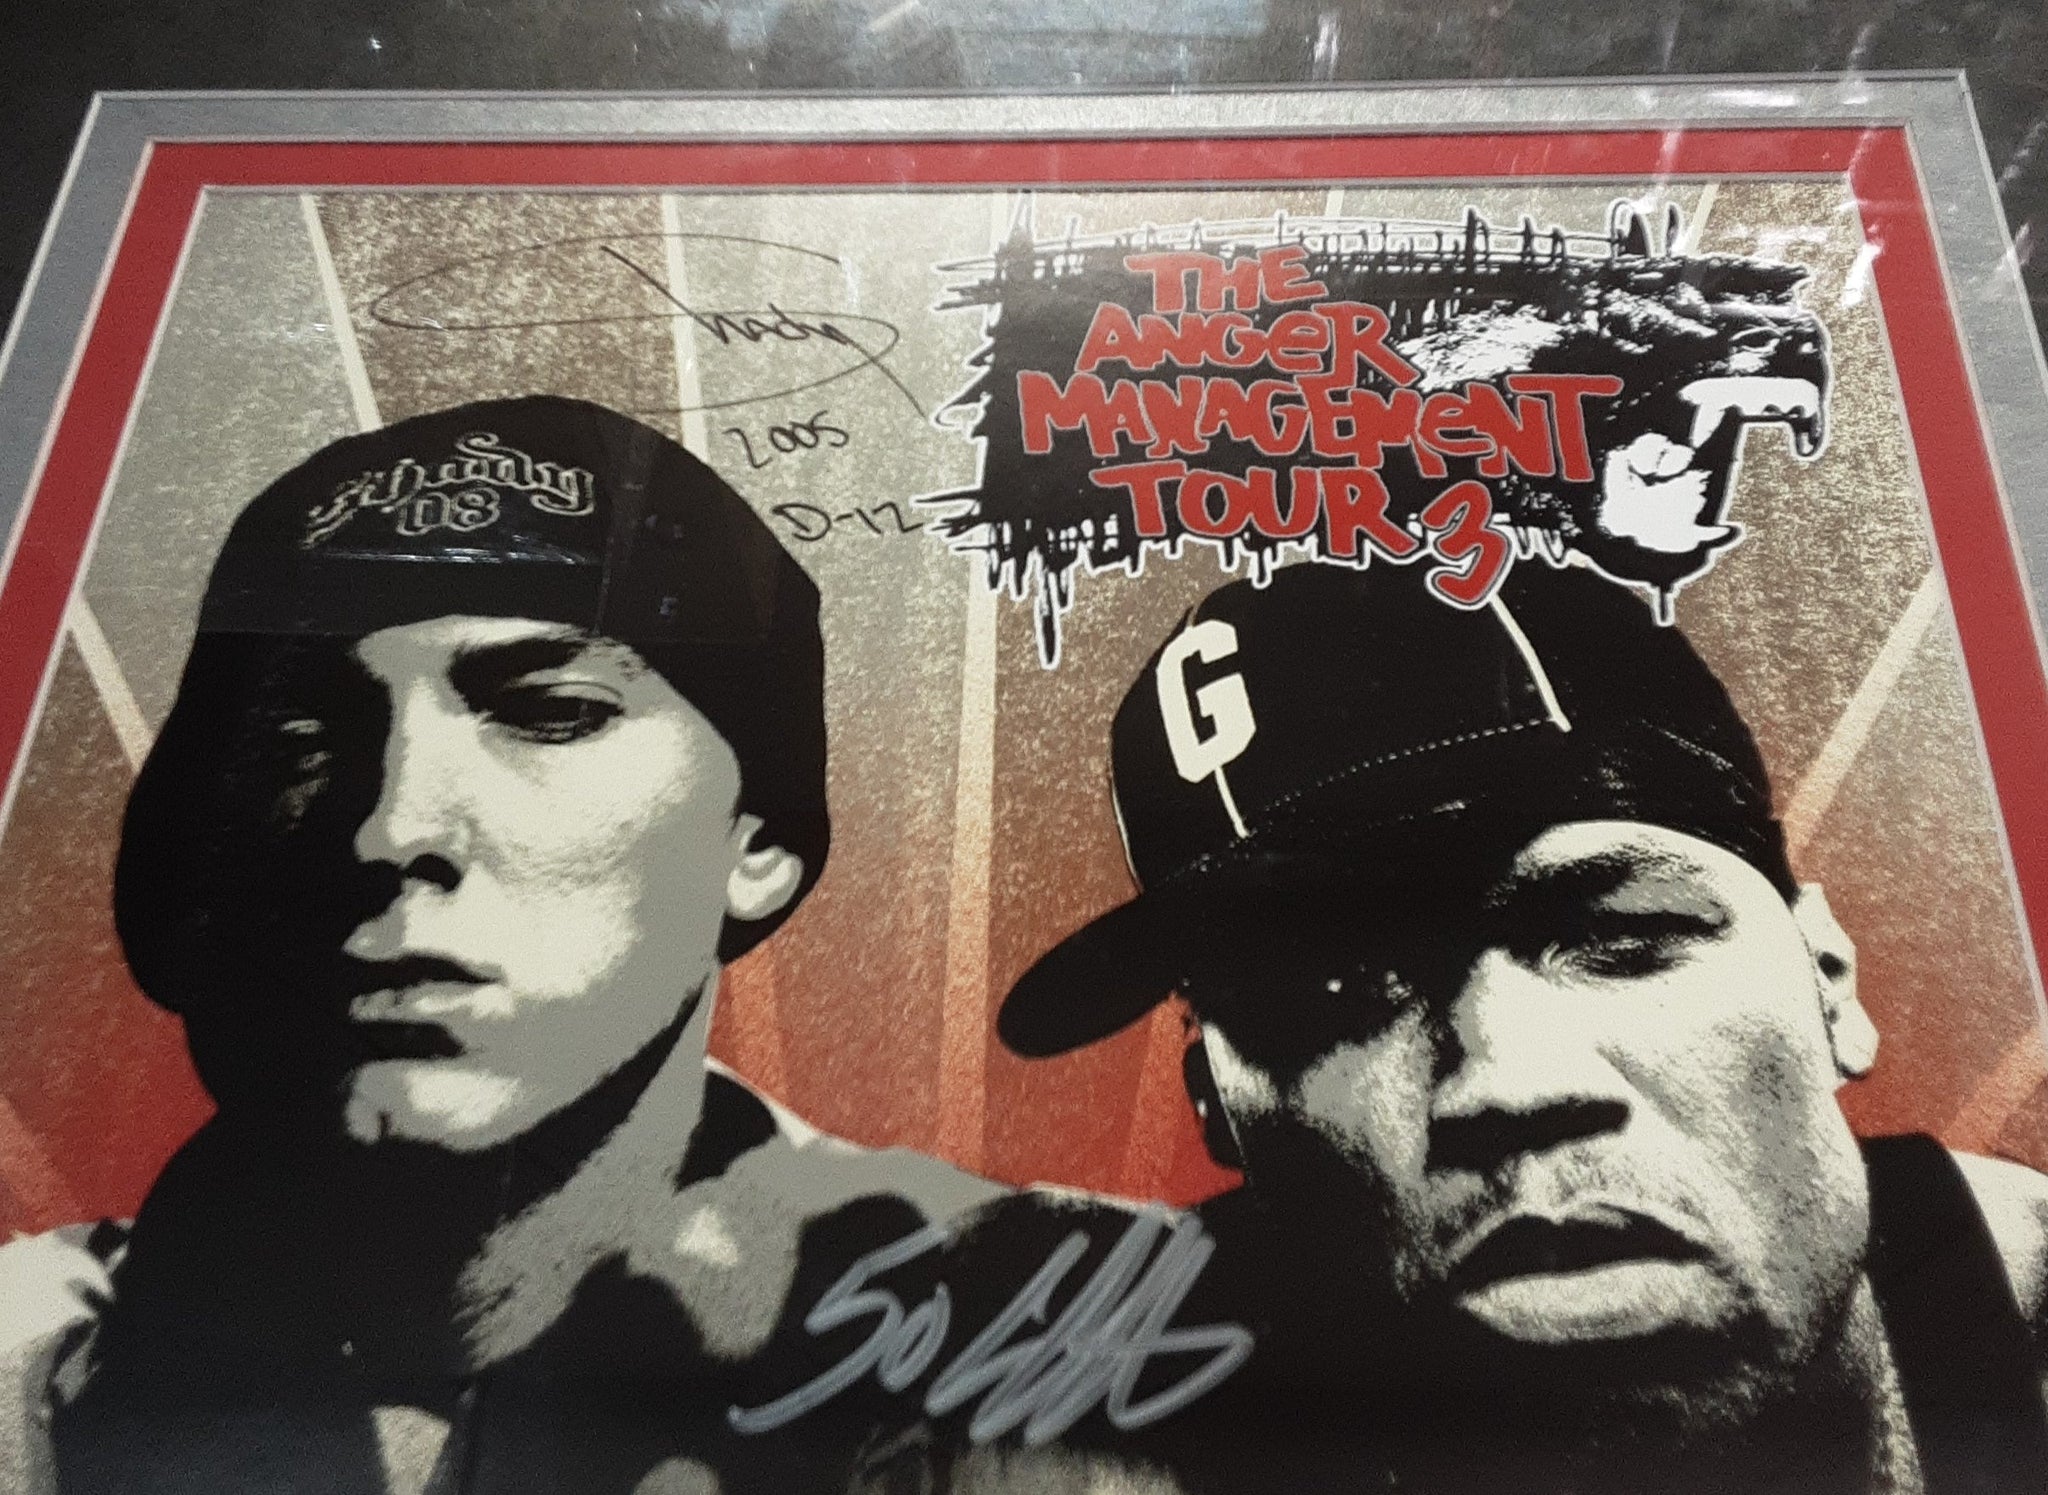  Aka aka Poster Eminem Concert Tour Rapper Art , Black , 12x18  inches poster